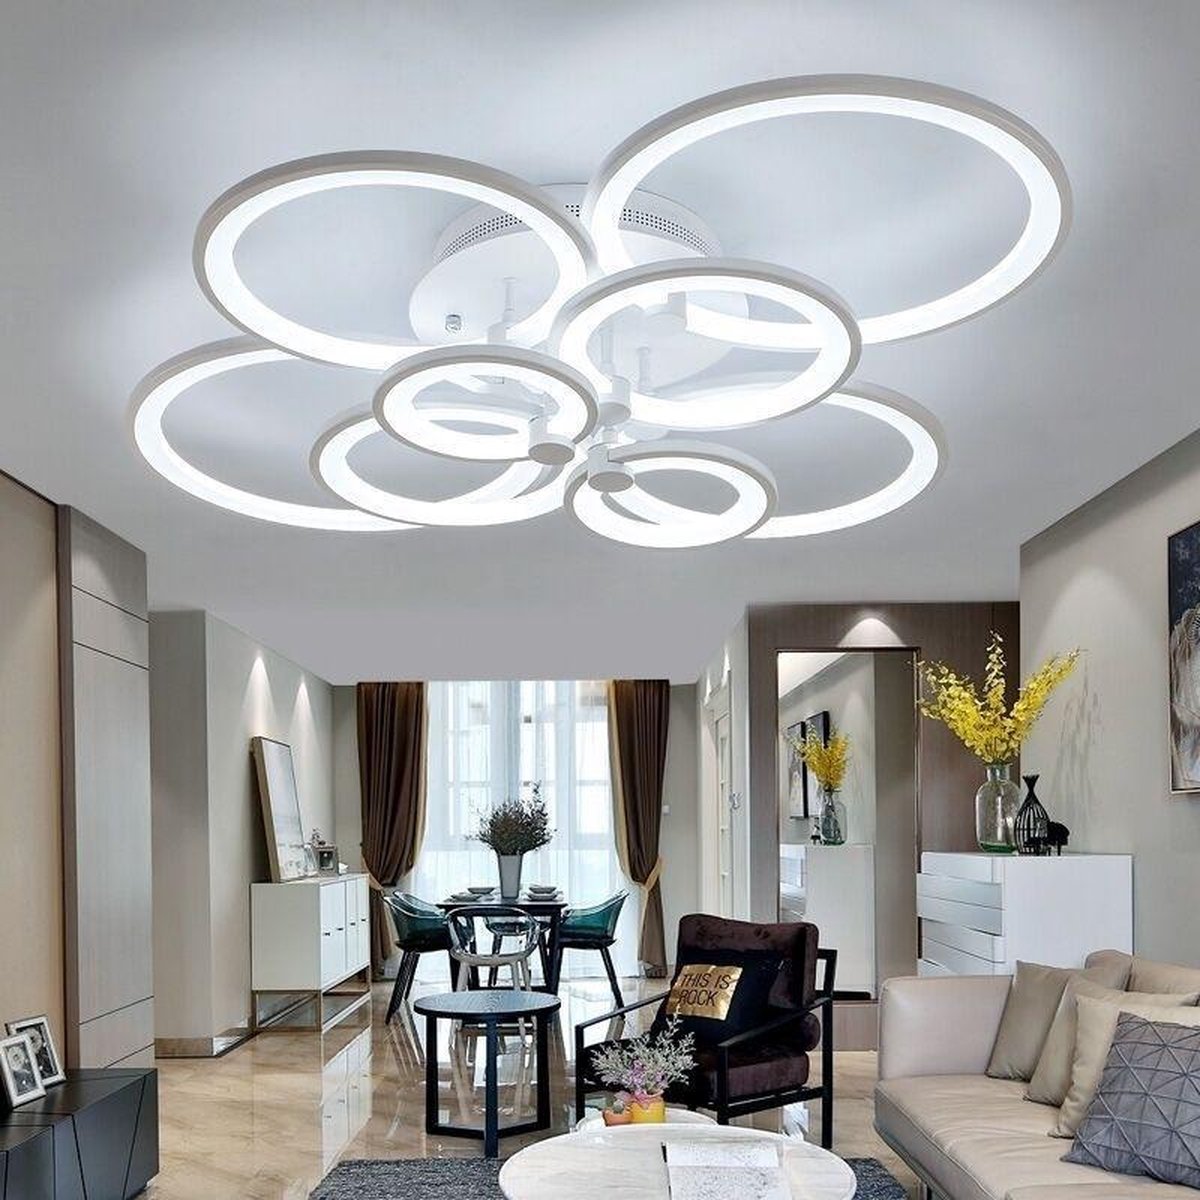 49W Creative ronde moderne kunst LED plafond lamp 6 koppen (wit licht) |  bol.com